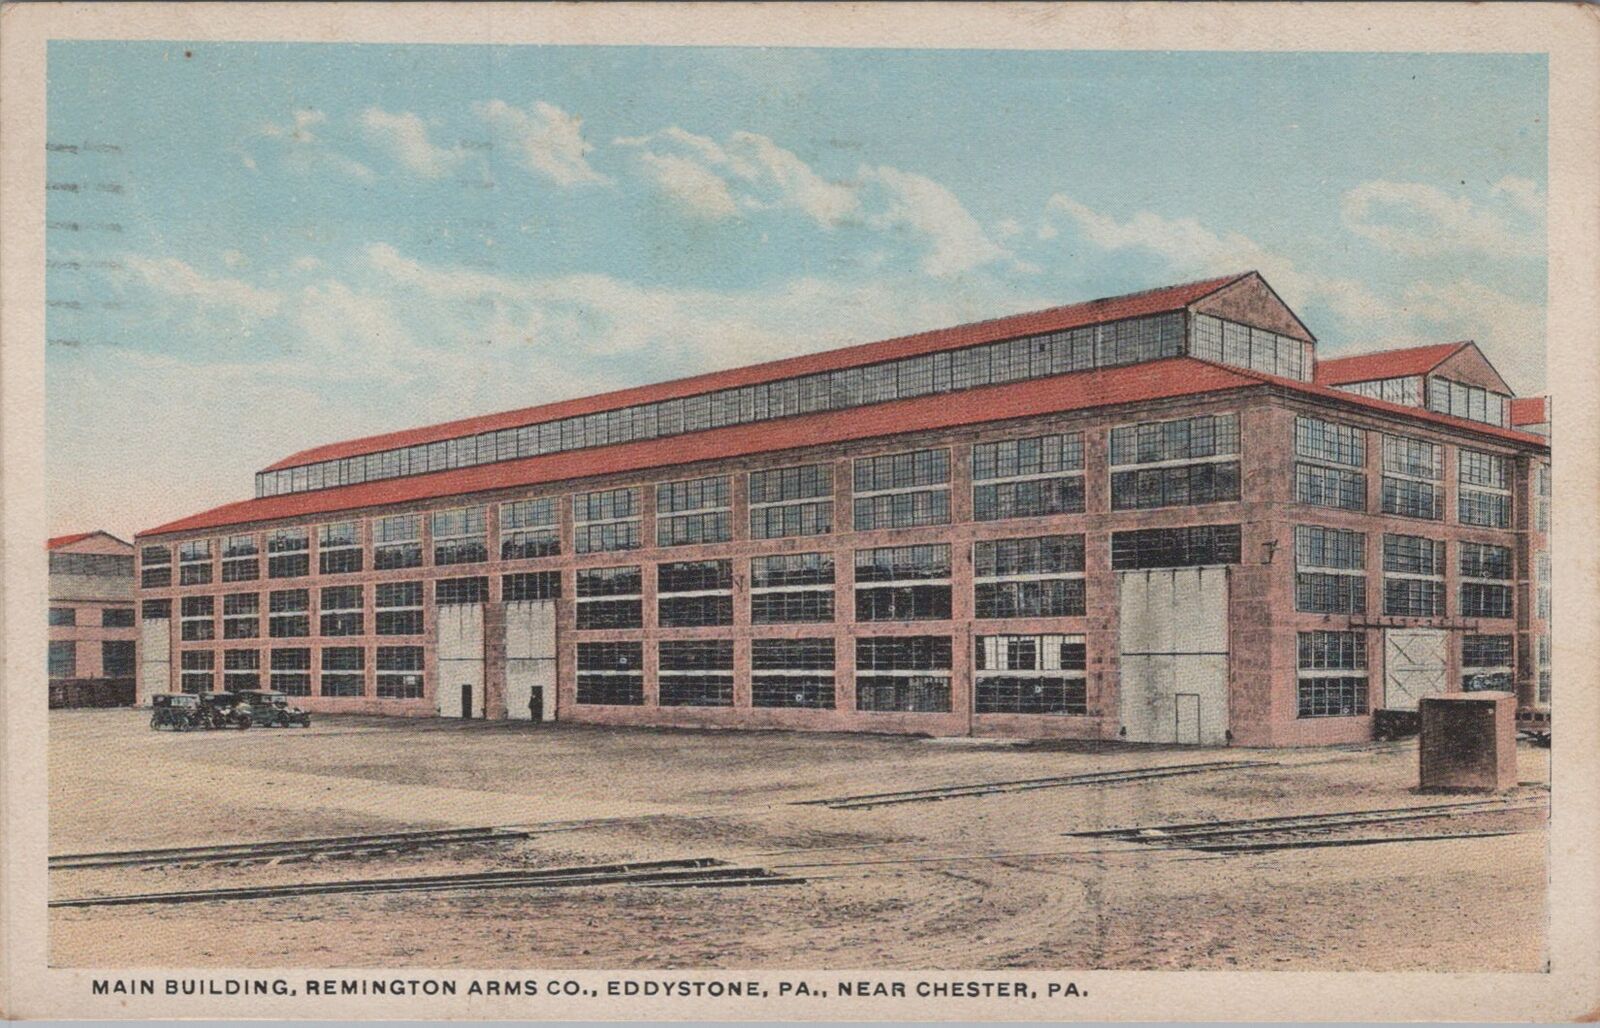 Main Building Remington Arms Co.Eddystone Chester Pennsylvania,1919 W.Park Sta.